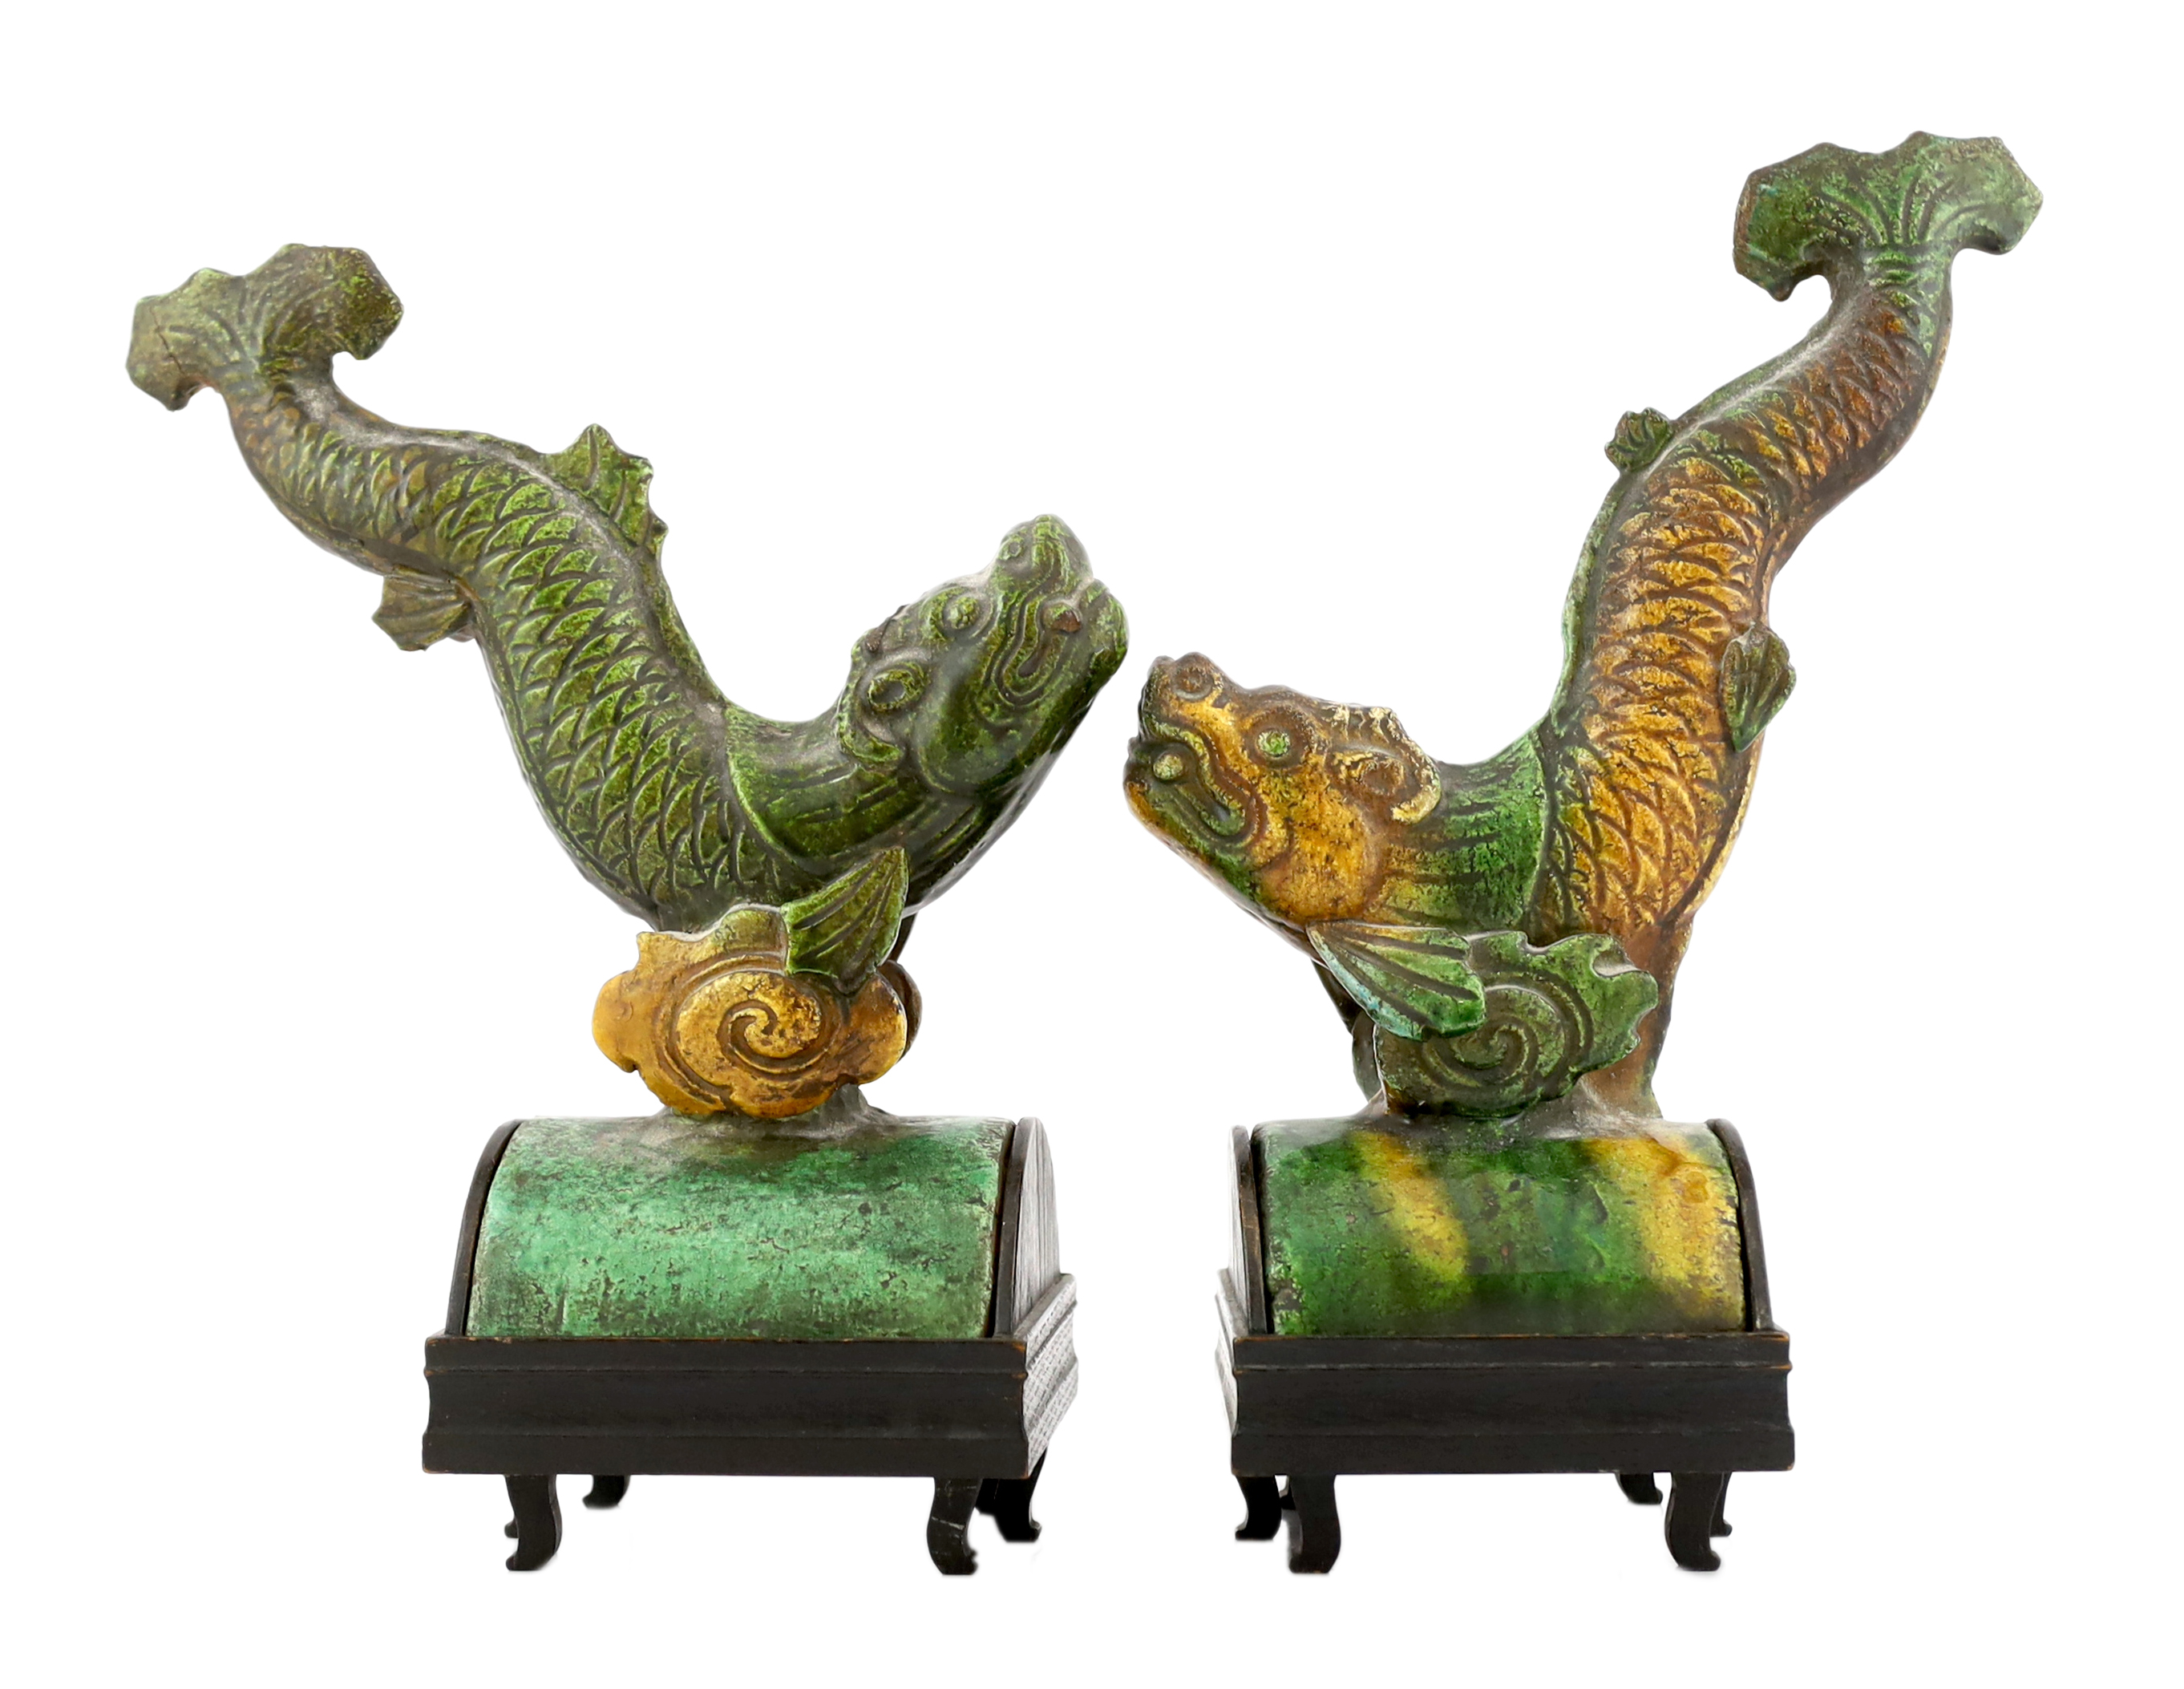 Two Chinese sancai ‘dragon-fish’ ridge tiles, Ming dynasty